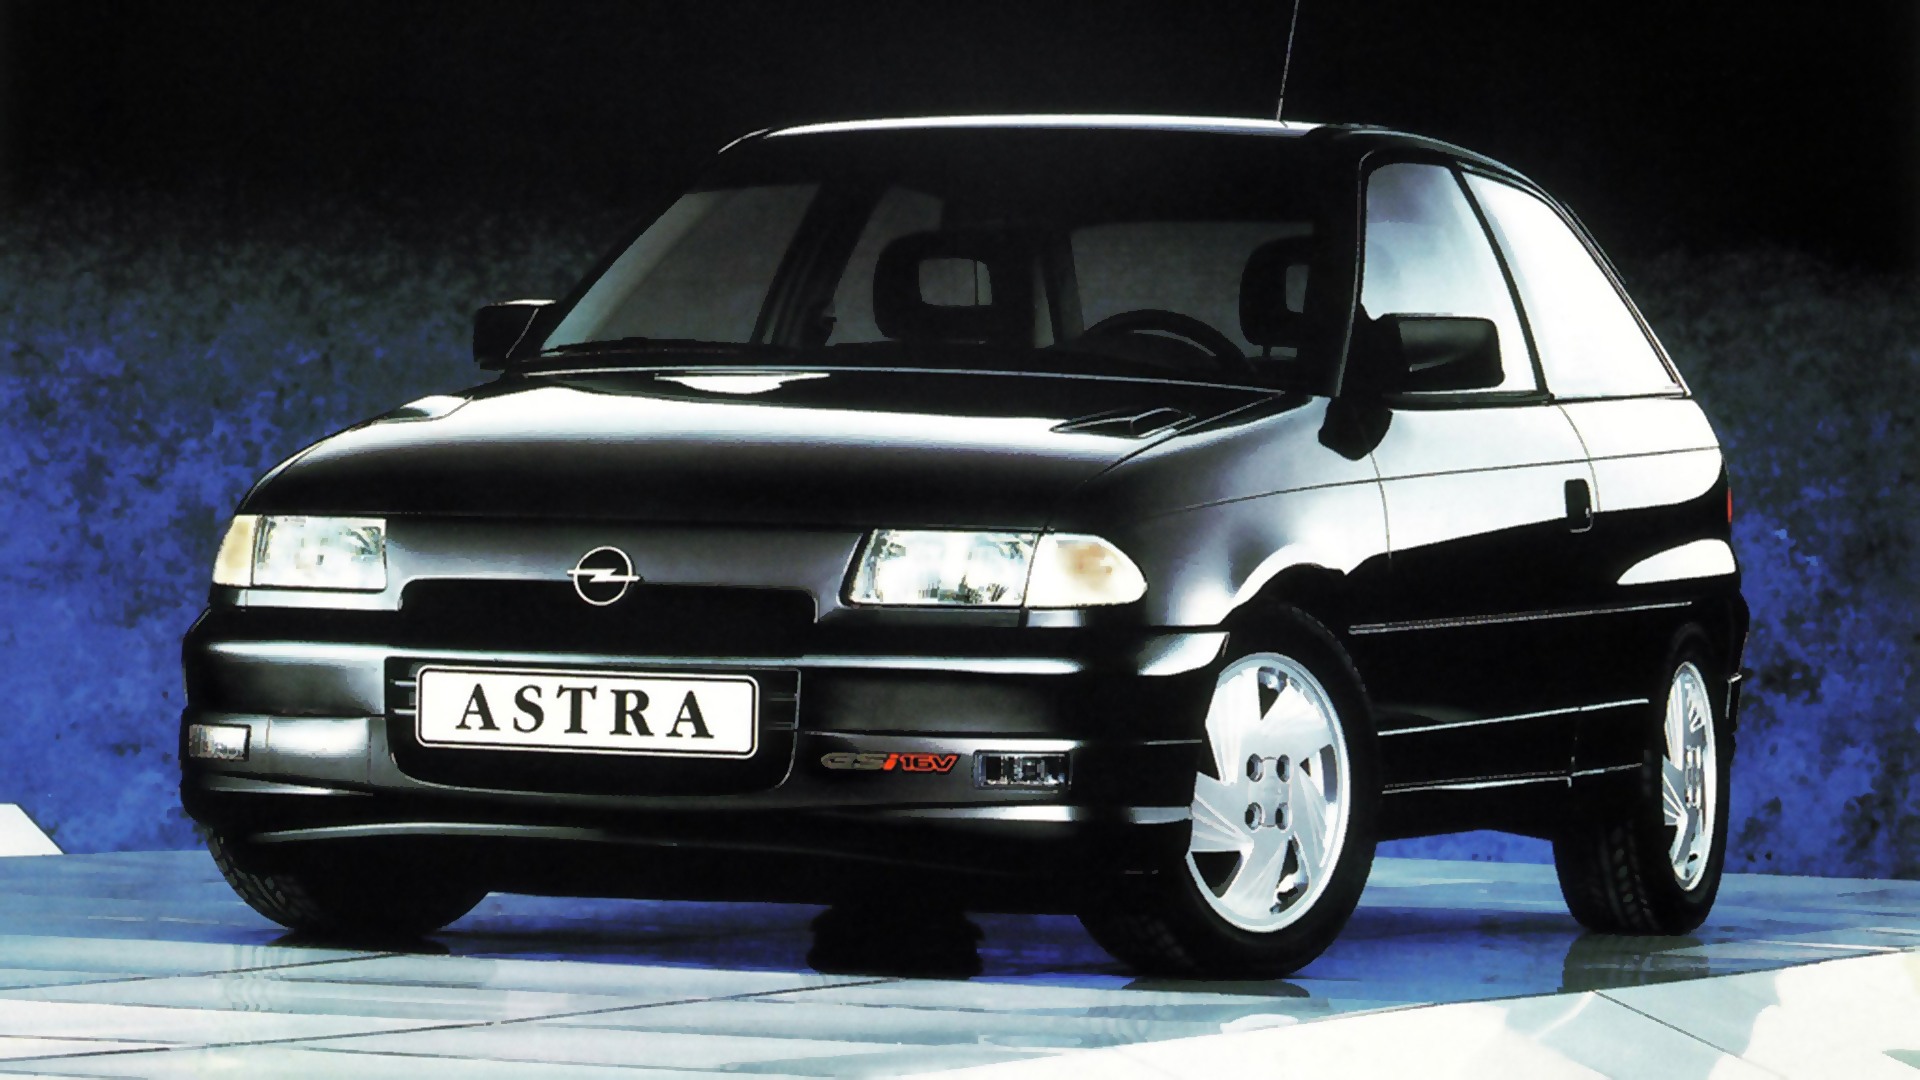 Coche del día: Opel Astra GSi 16v